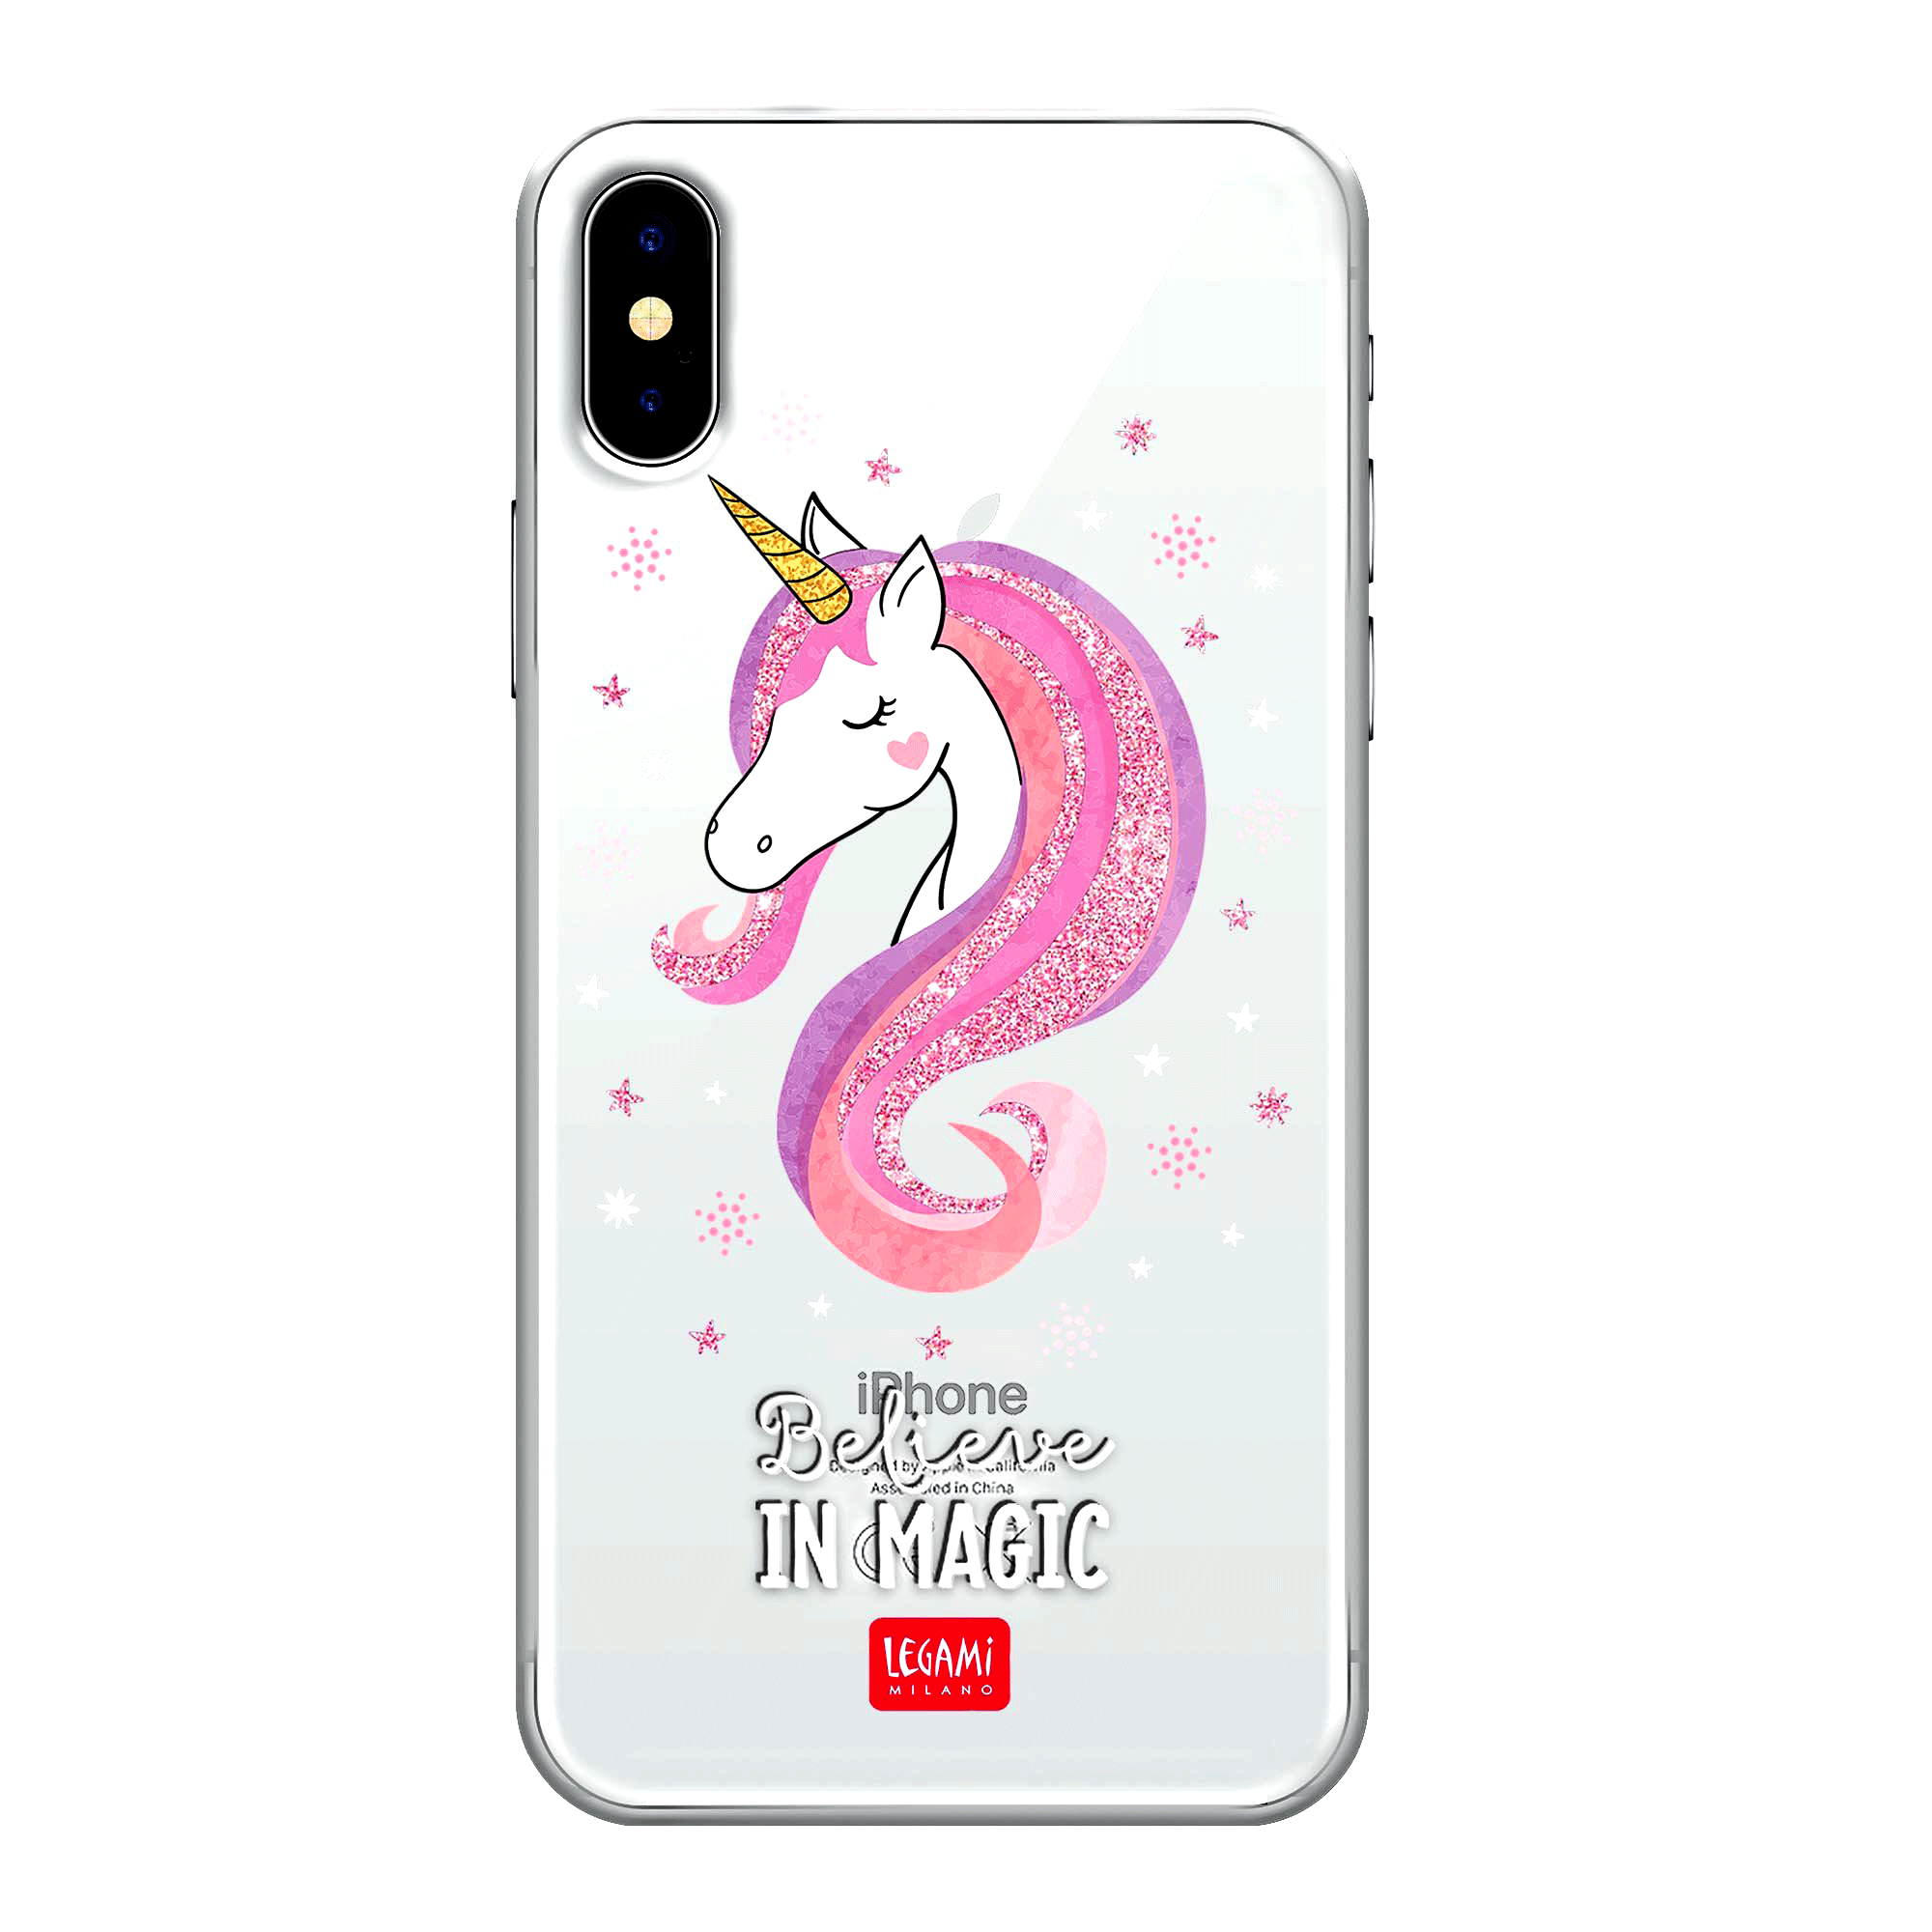  Carcasa de Iphone X/XS - Unicorn | Legami 